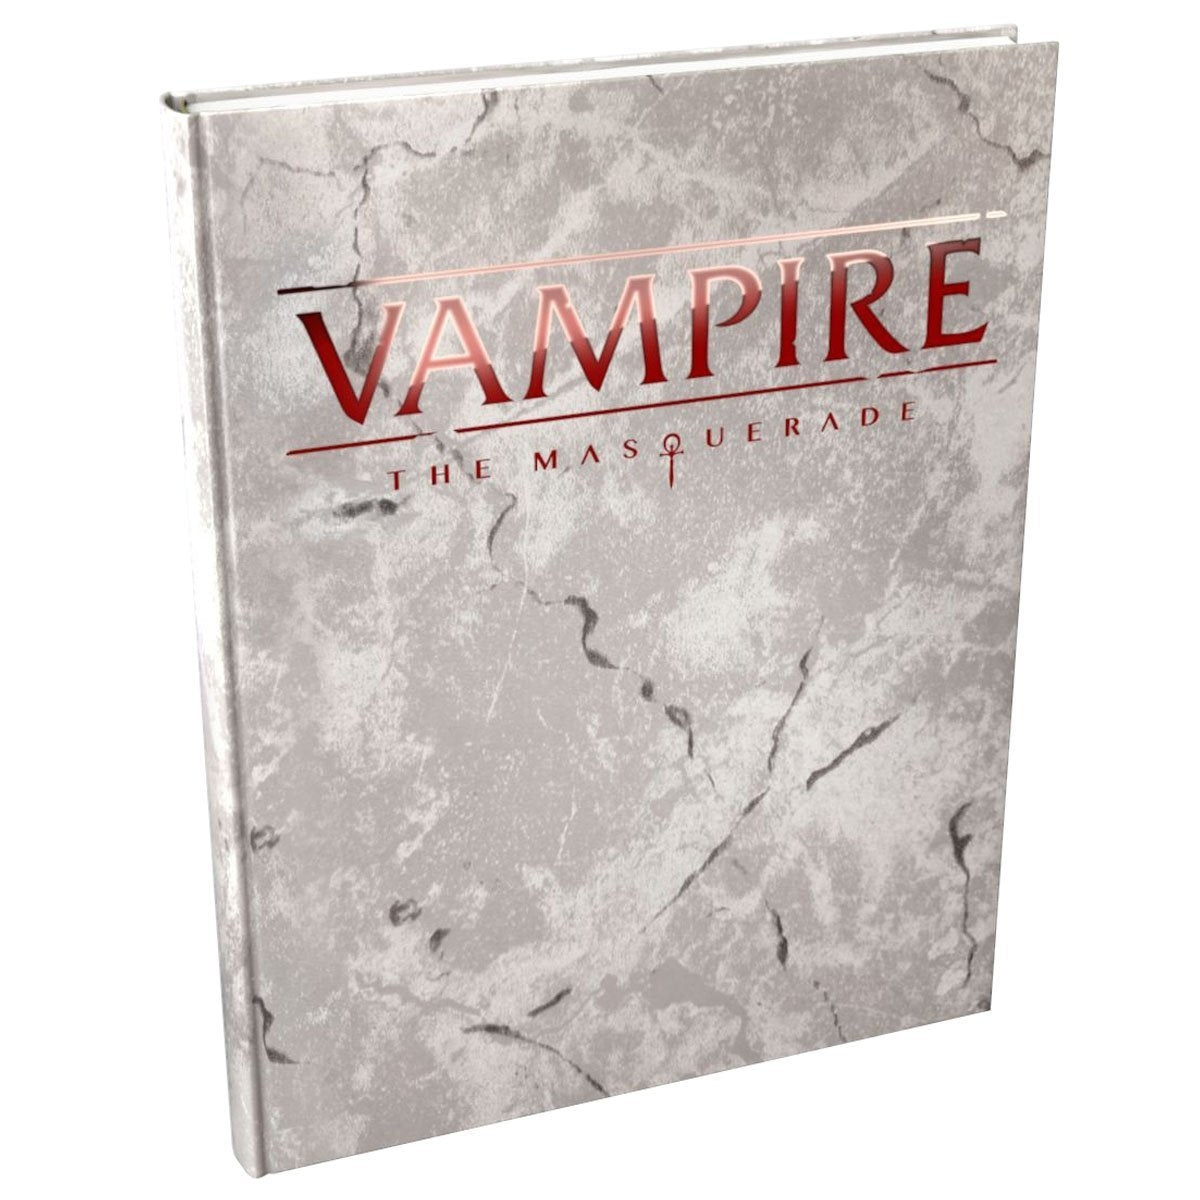 Vampire Masquerade Deluxe Edition